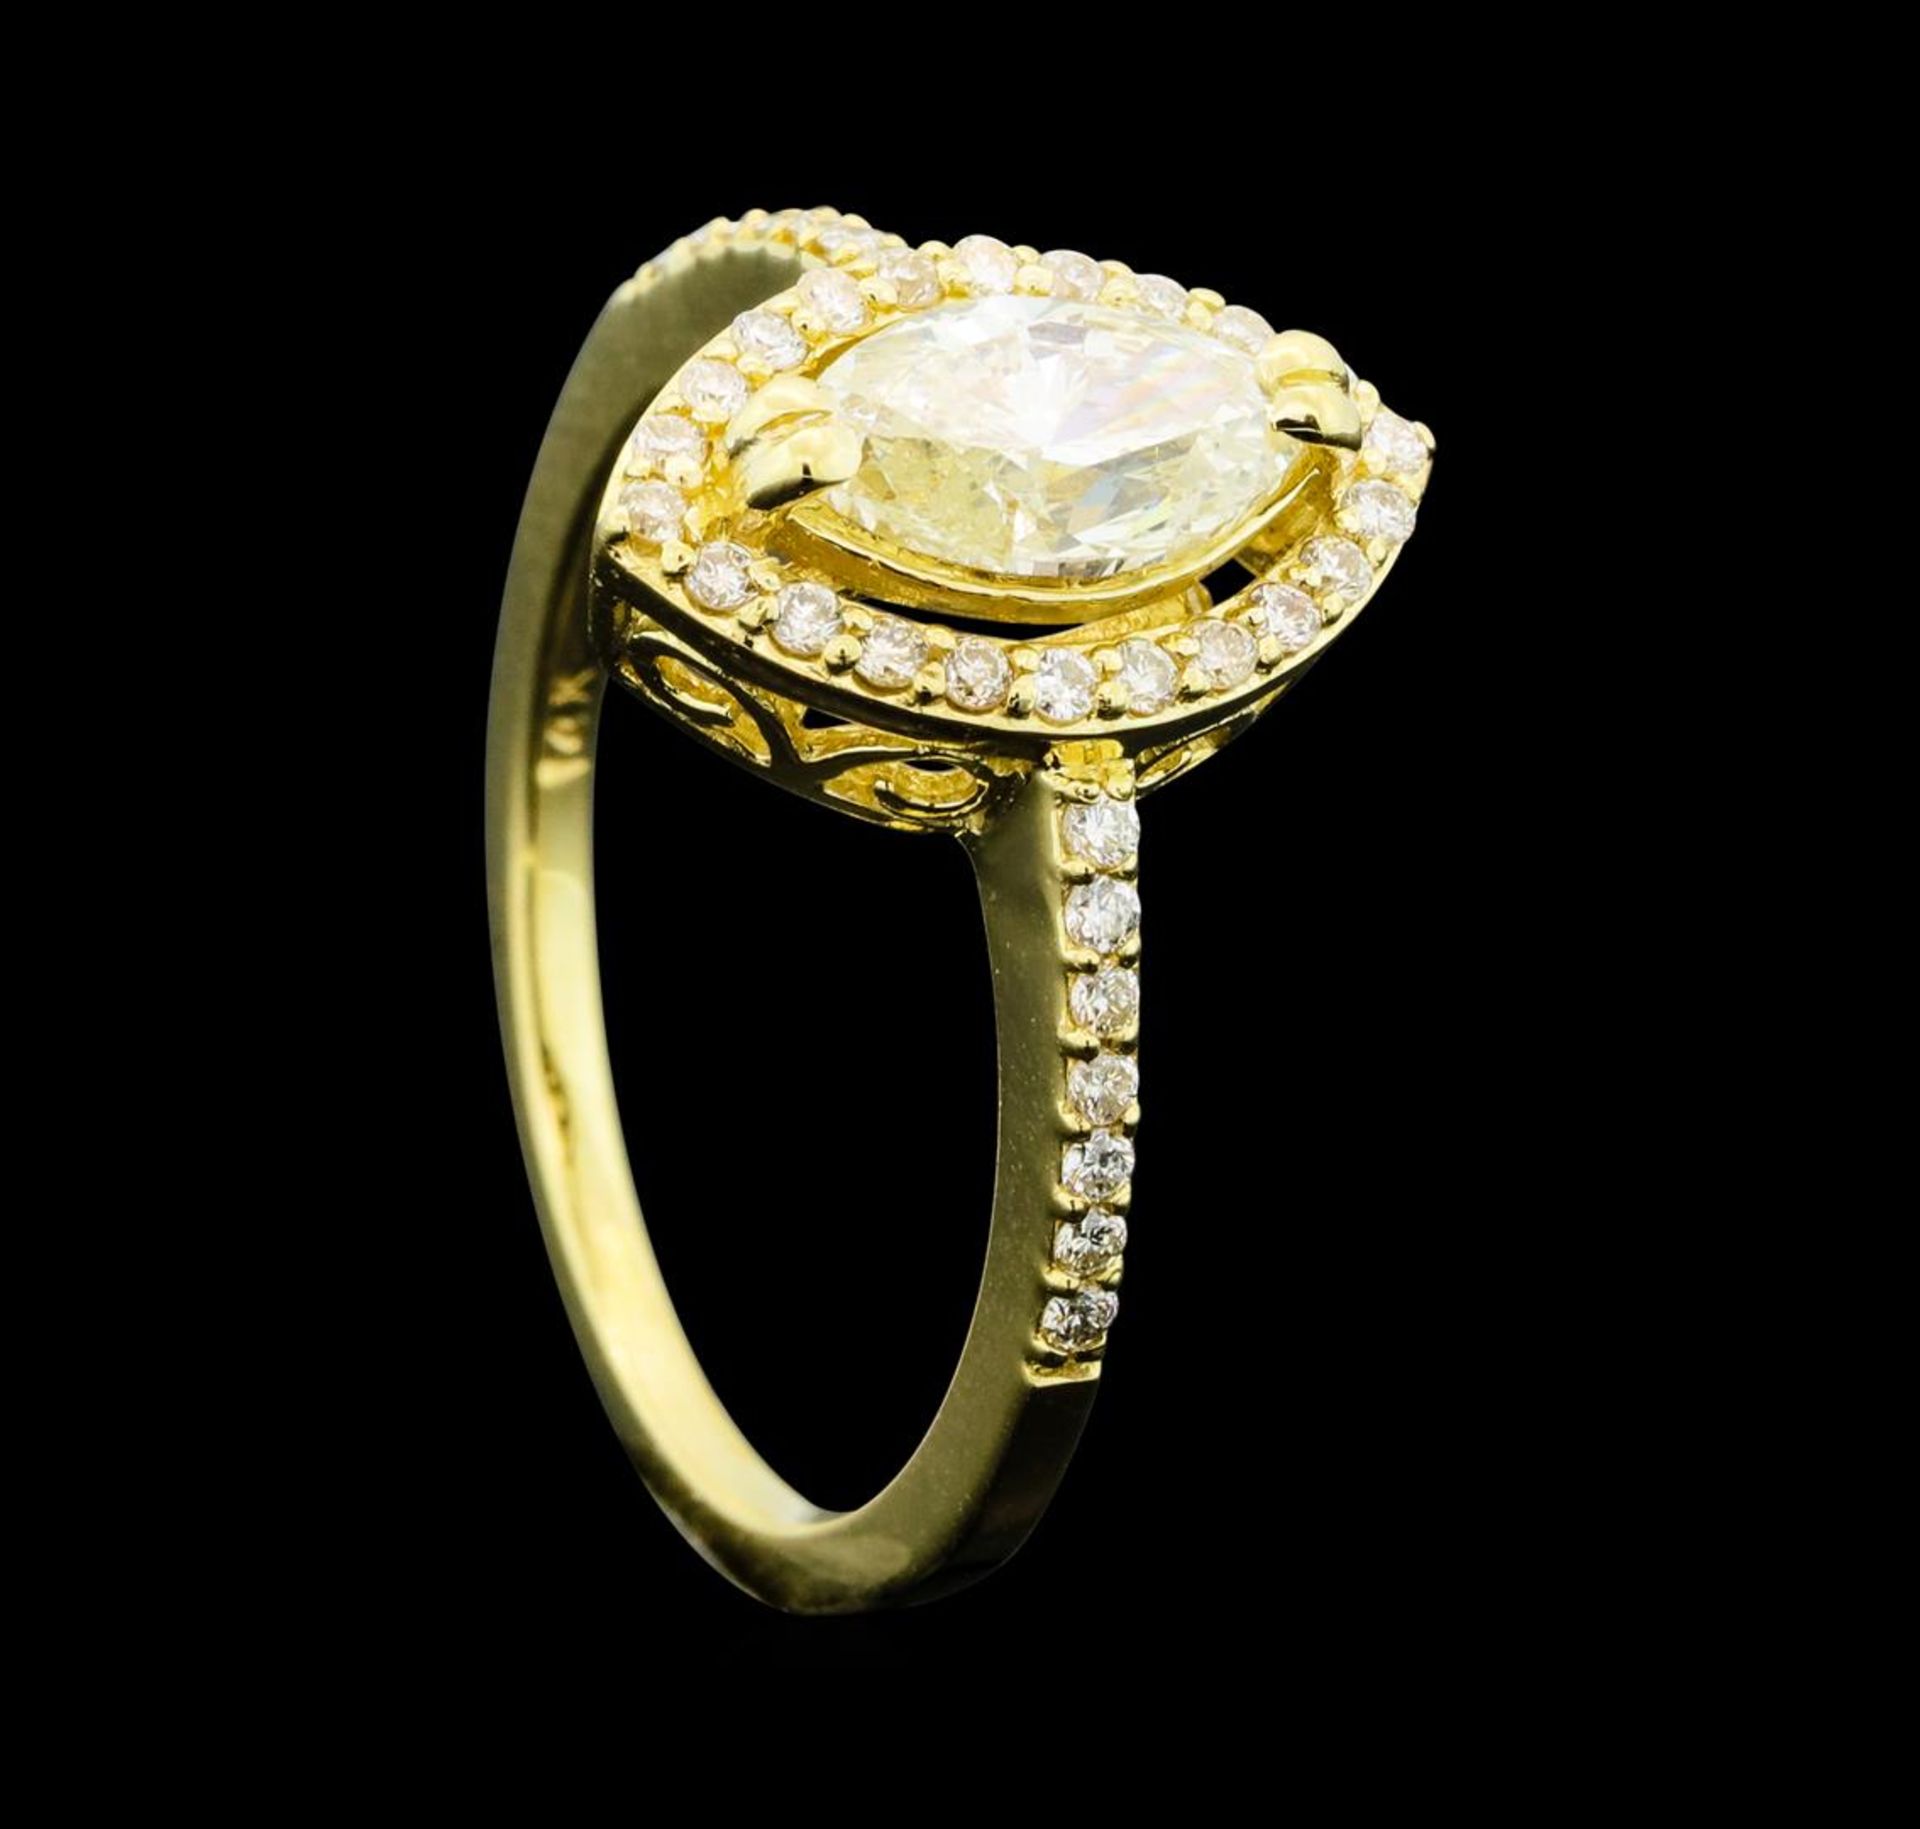 1.16 ctw Diamond Ring - 14KT Yellow Gold - Image 4 of 5